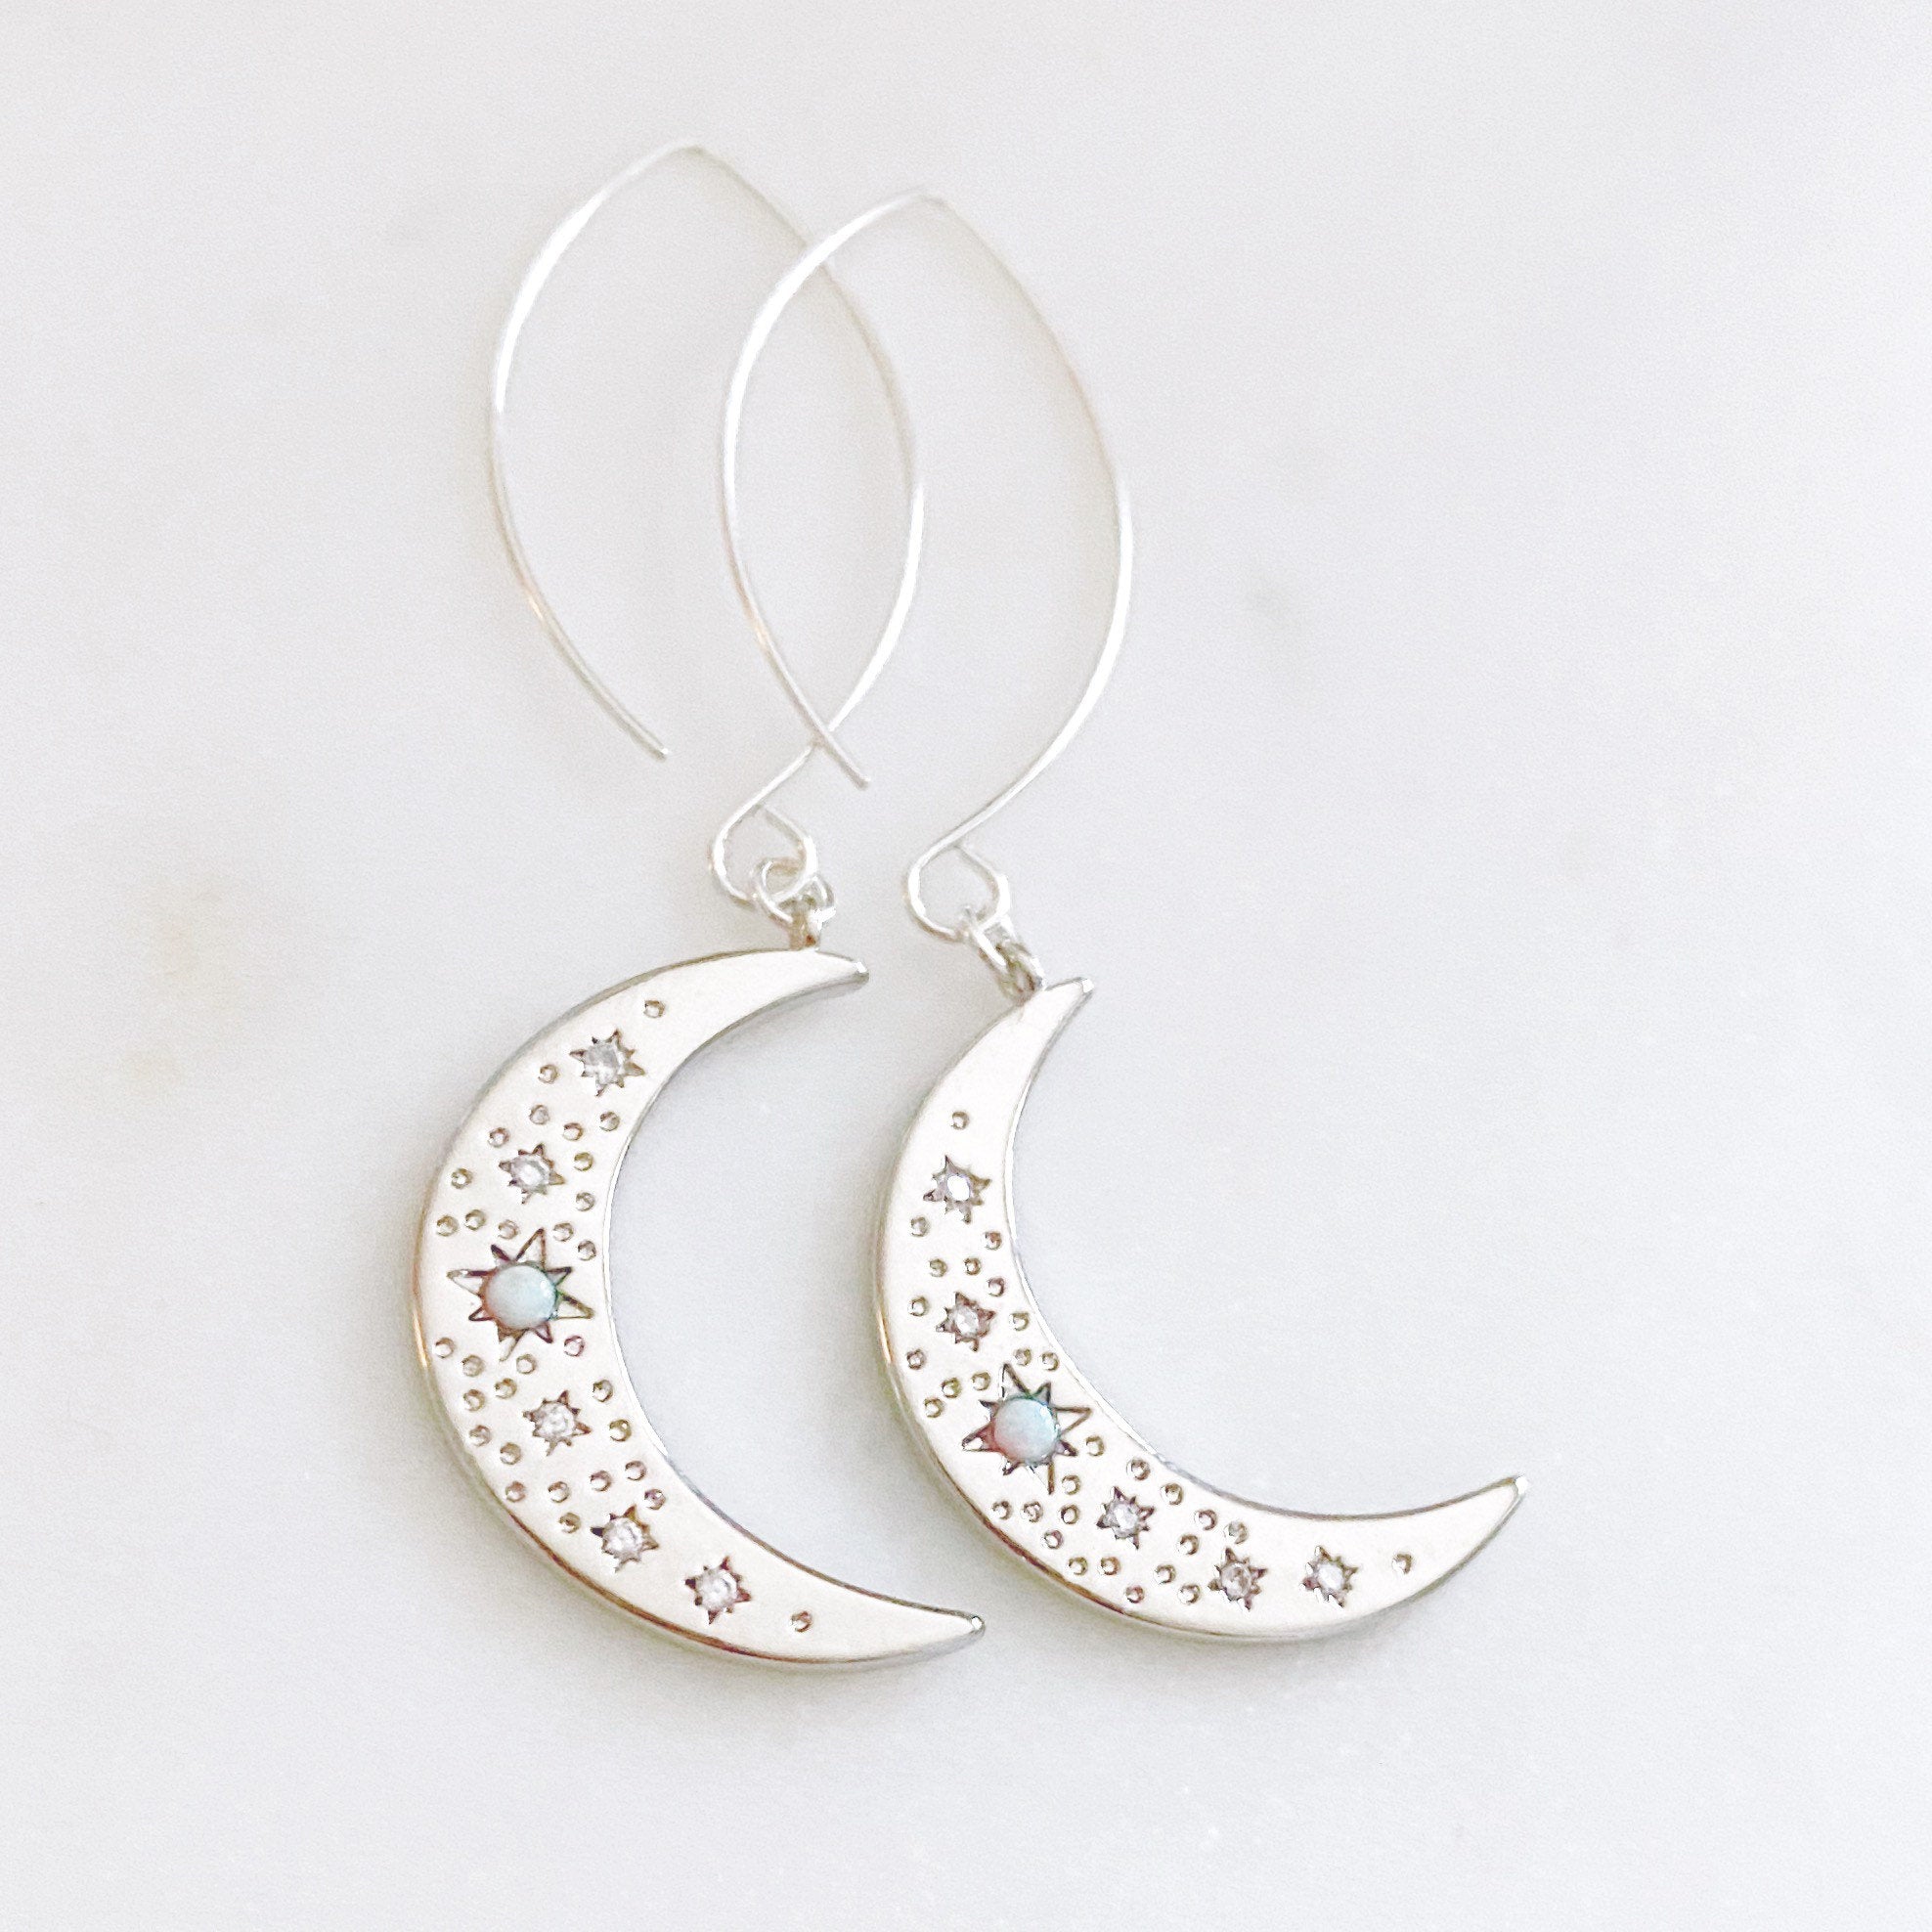 Moon Earrings, Celestial Earrings, Opal Earrings, Mothers Day Gift from Daughter, Mom Gift, Estelle